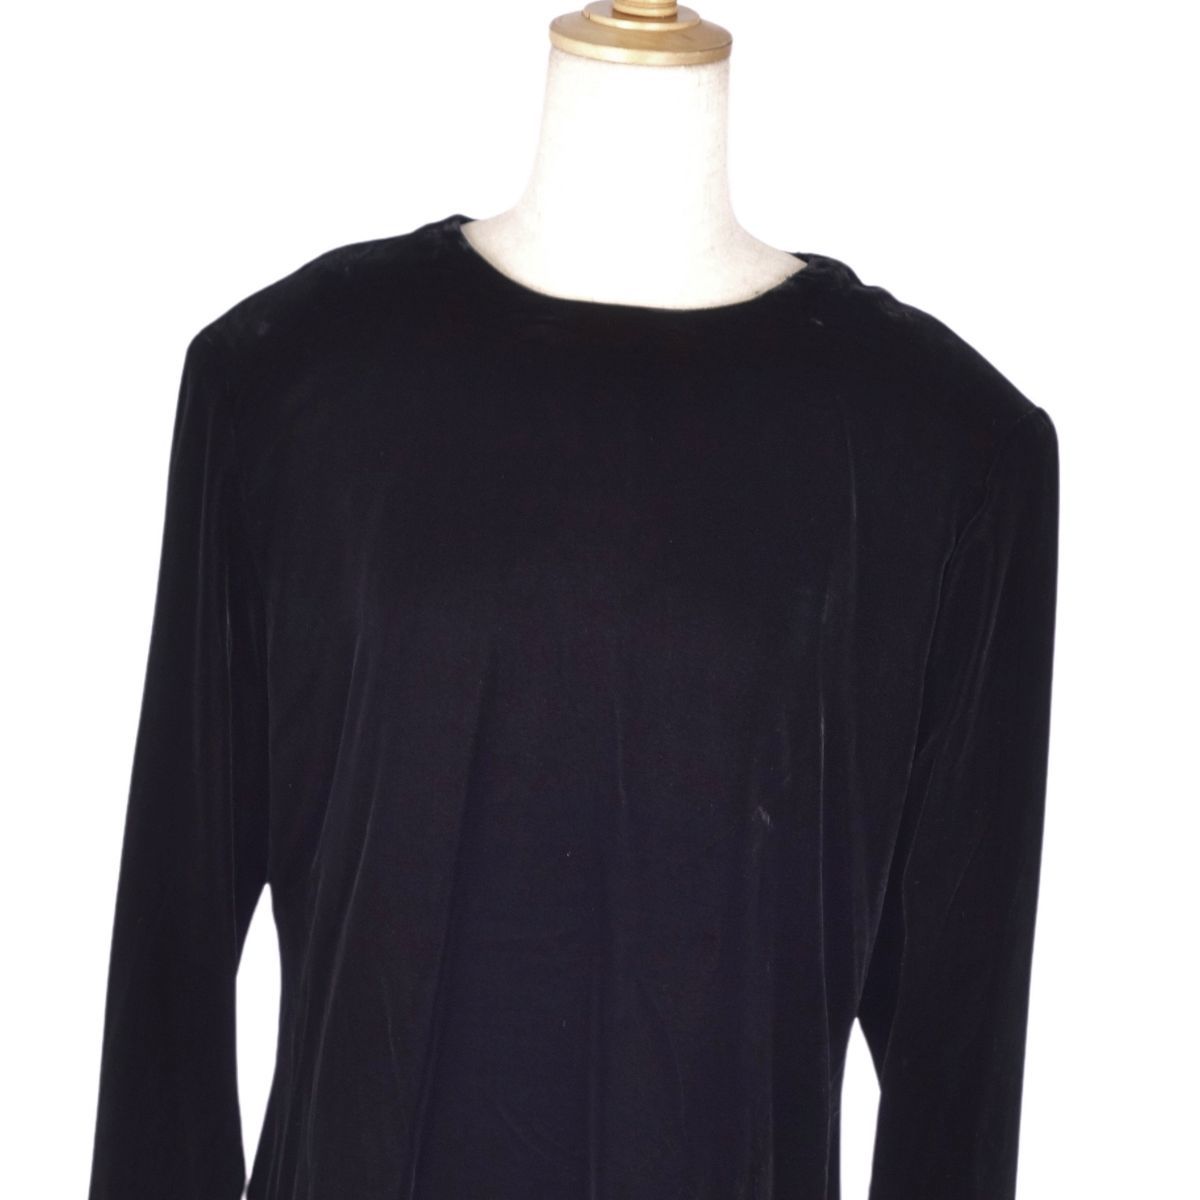  beautiful goods Gianni Versace GIANNI VERSACE shirt blouse long sleeve velour plain tops lady's 42 black cg09ed-rm04f06432